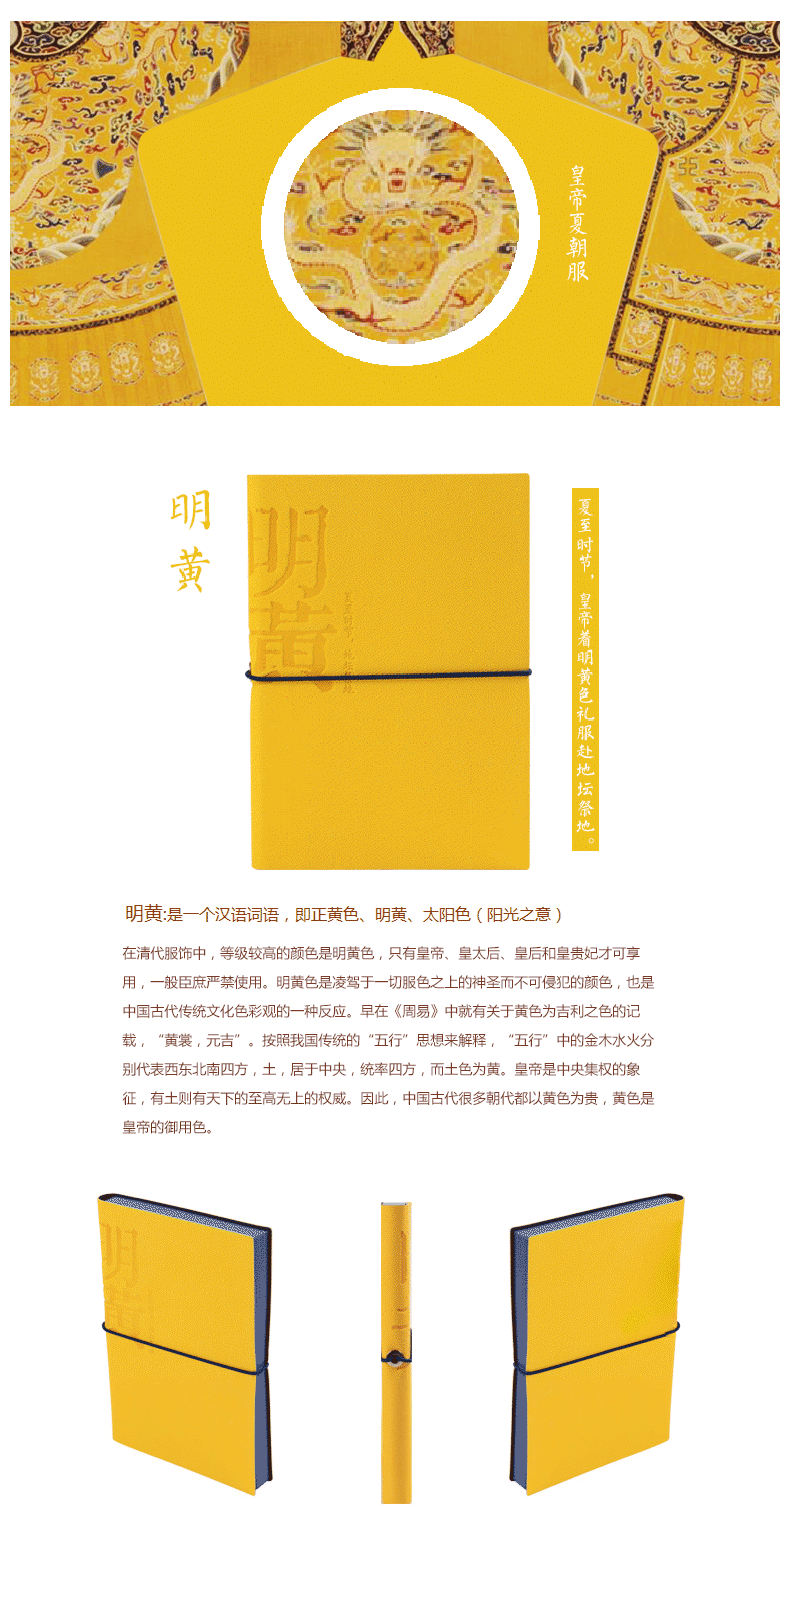 Notebook #Yellow